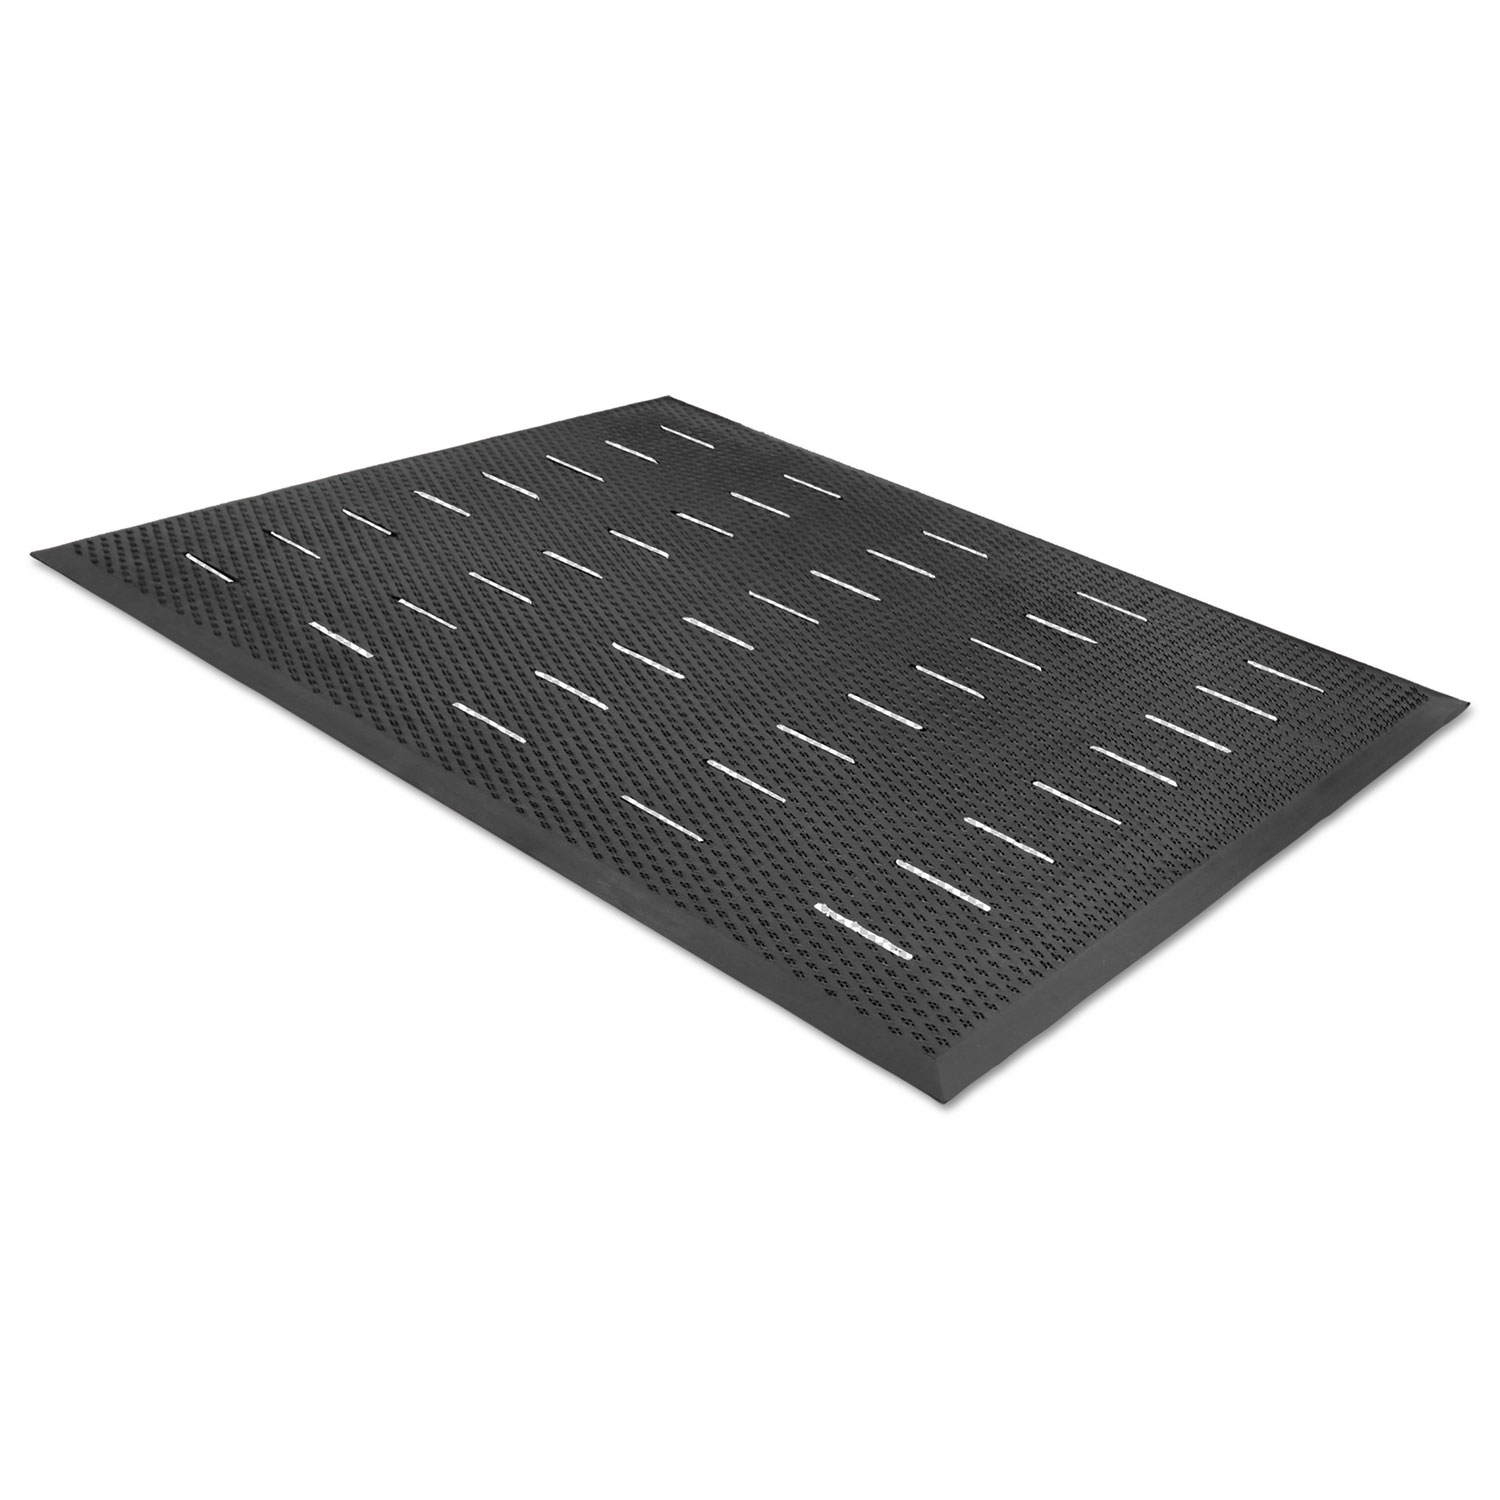  Guardian 34030401 Free Flow Comfort Utility Floor Mat, 36 x 48, Black (MLL34030401) 